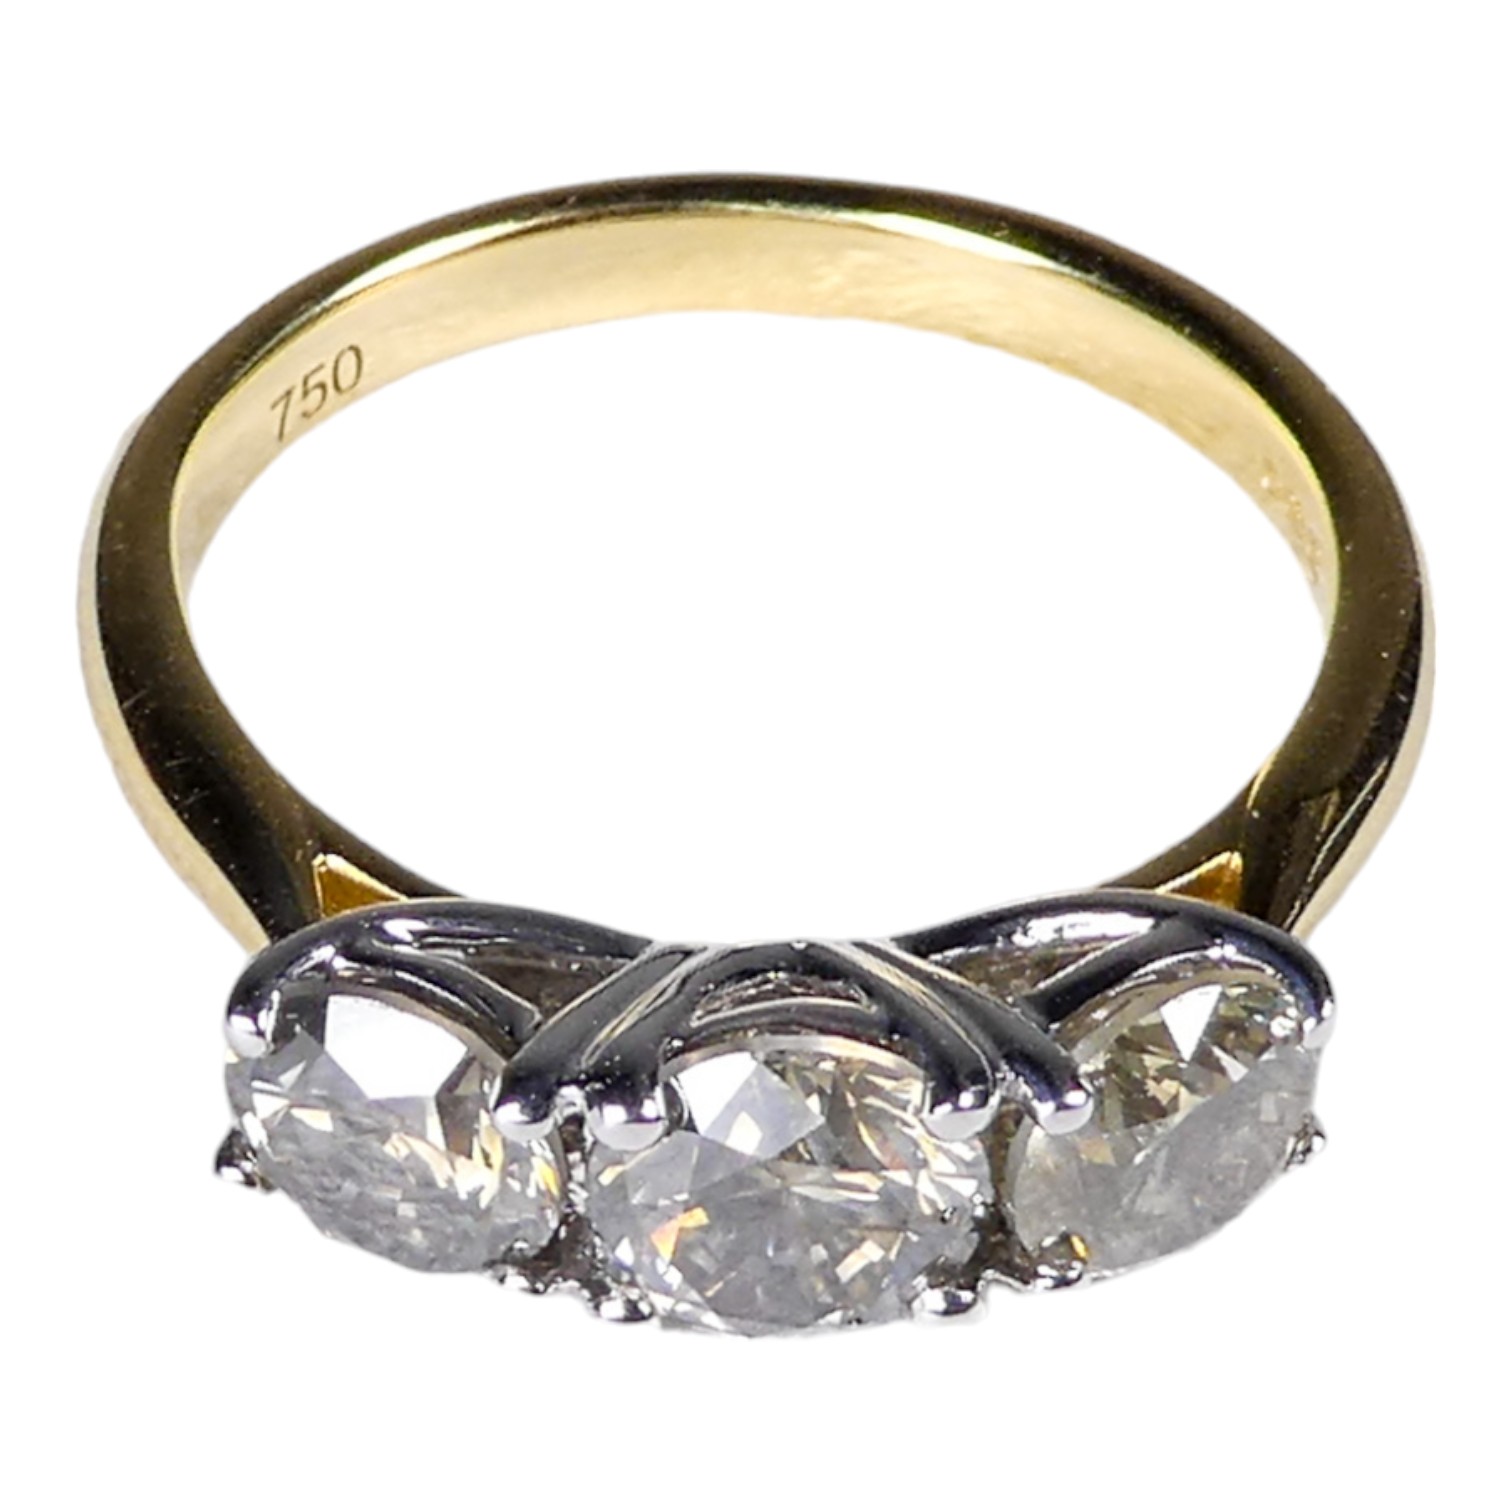 An 18ct white and yellow gold circular brilliant cut three stone diamond ring - diamond weight 1.